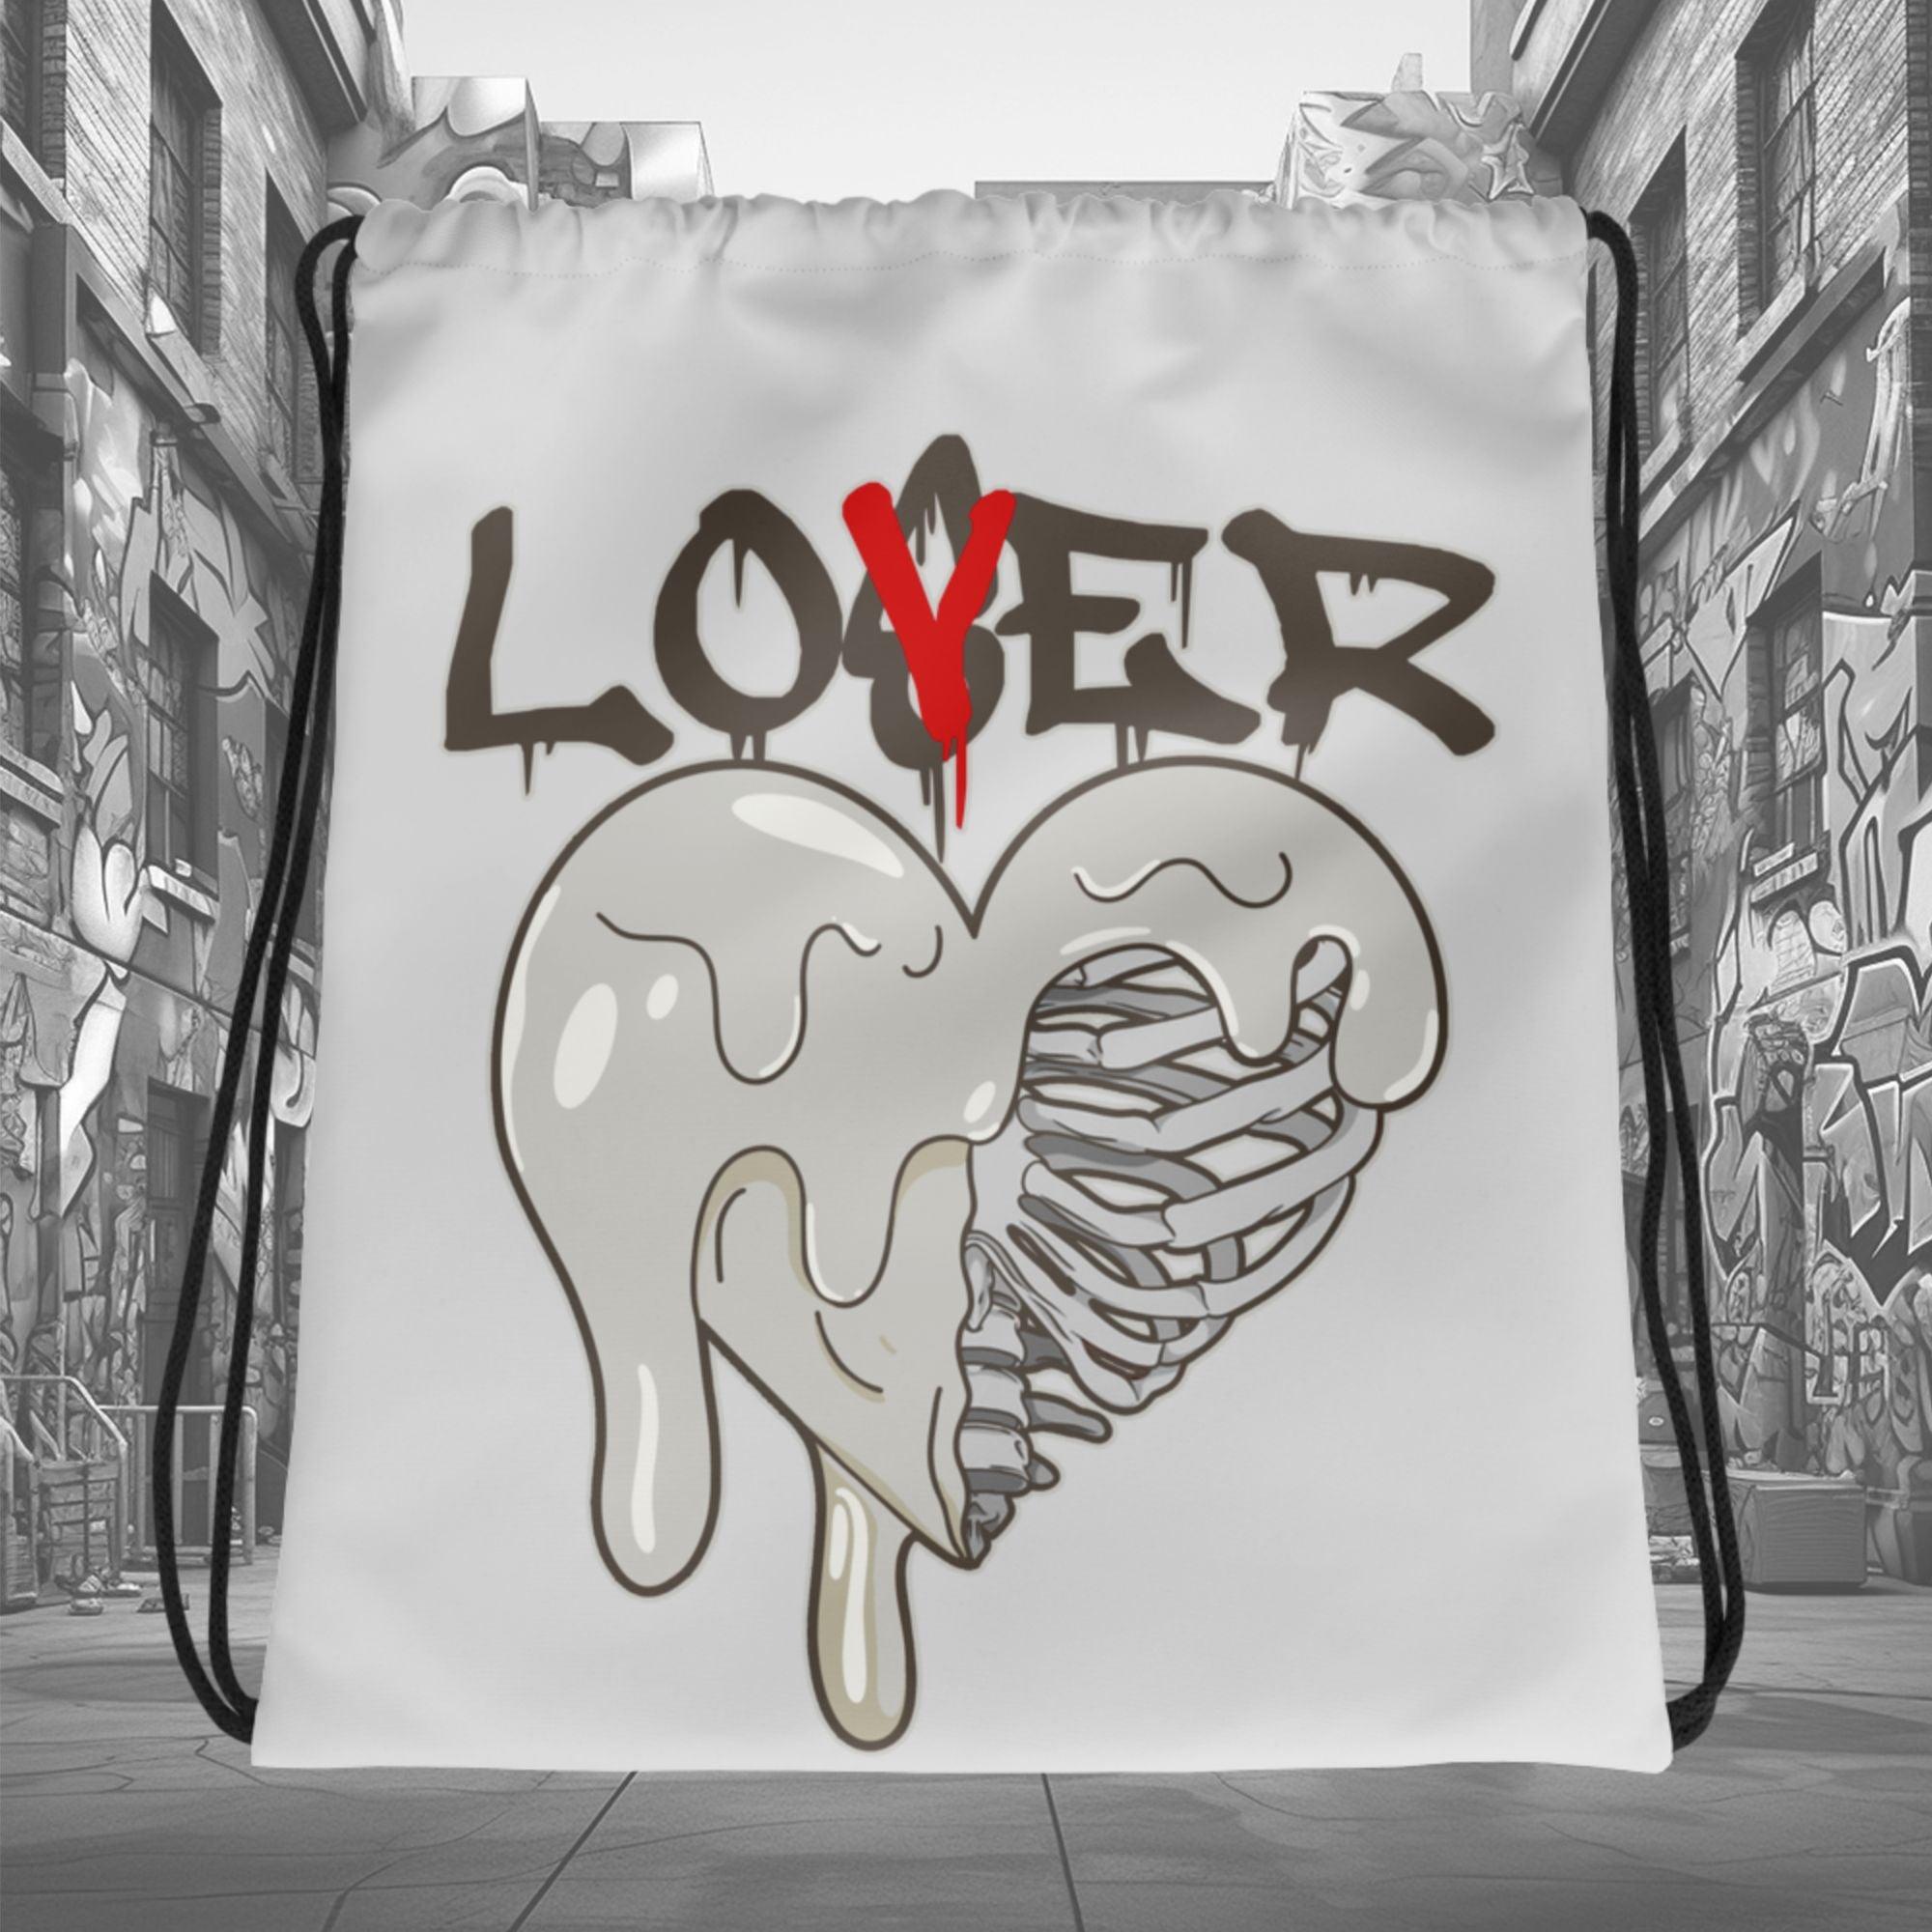 Lover Loser Drawstring Bag Jordan 1s Travis Scott Low Reverse Mocha photo